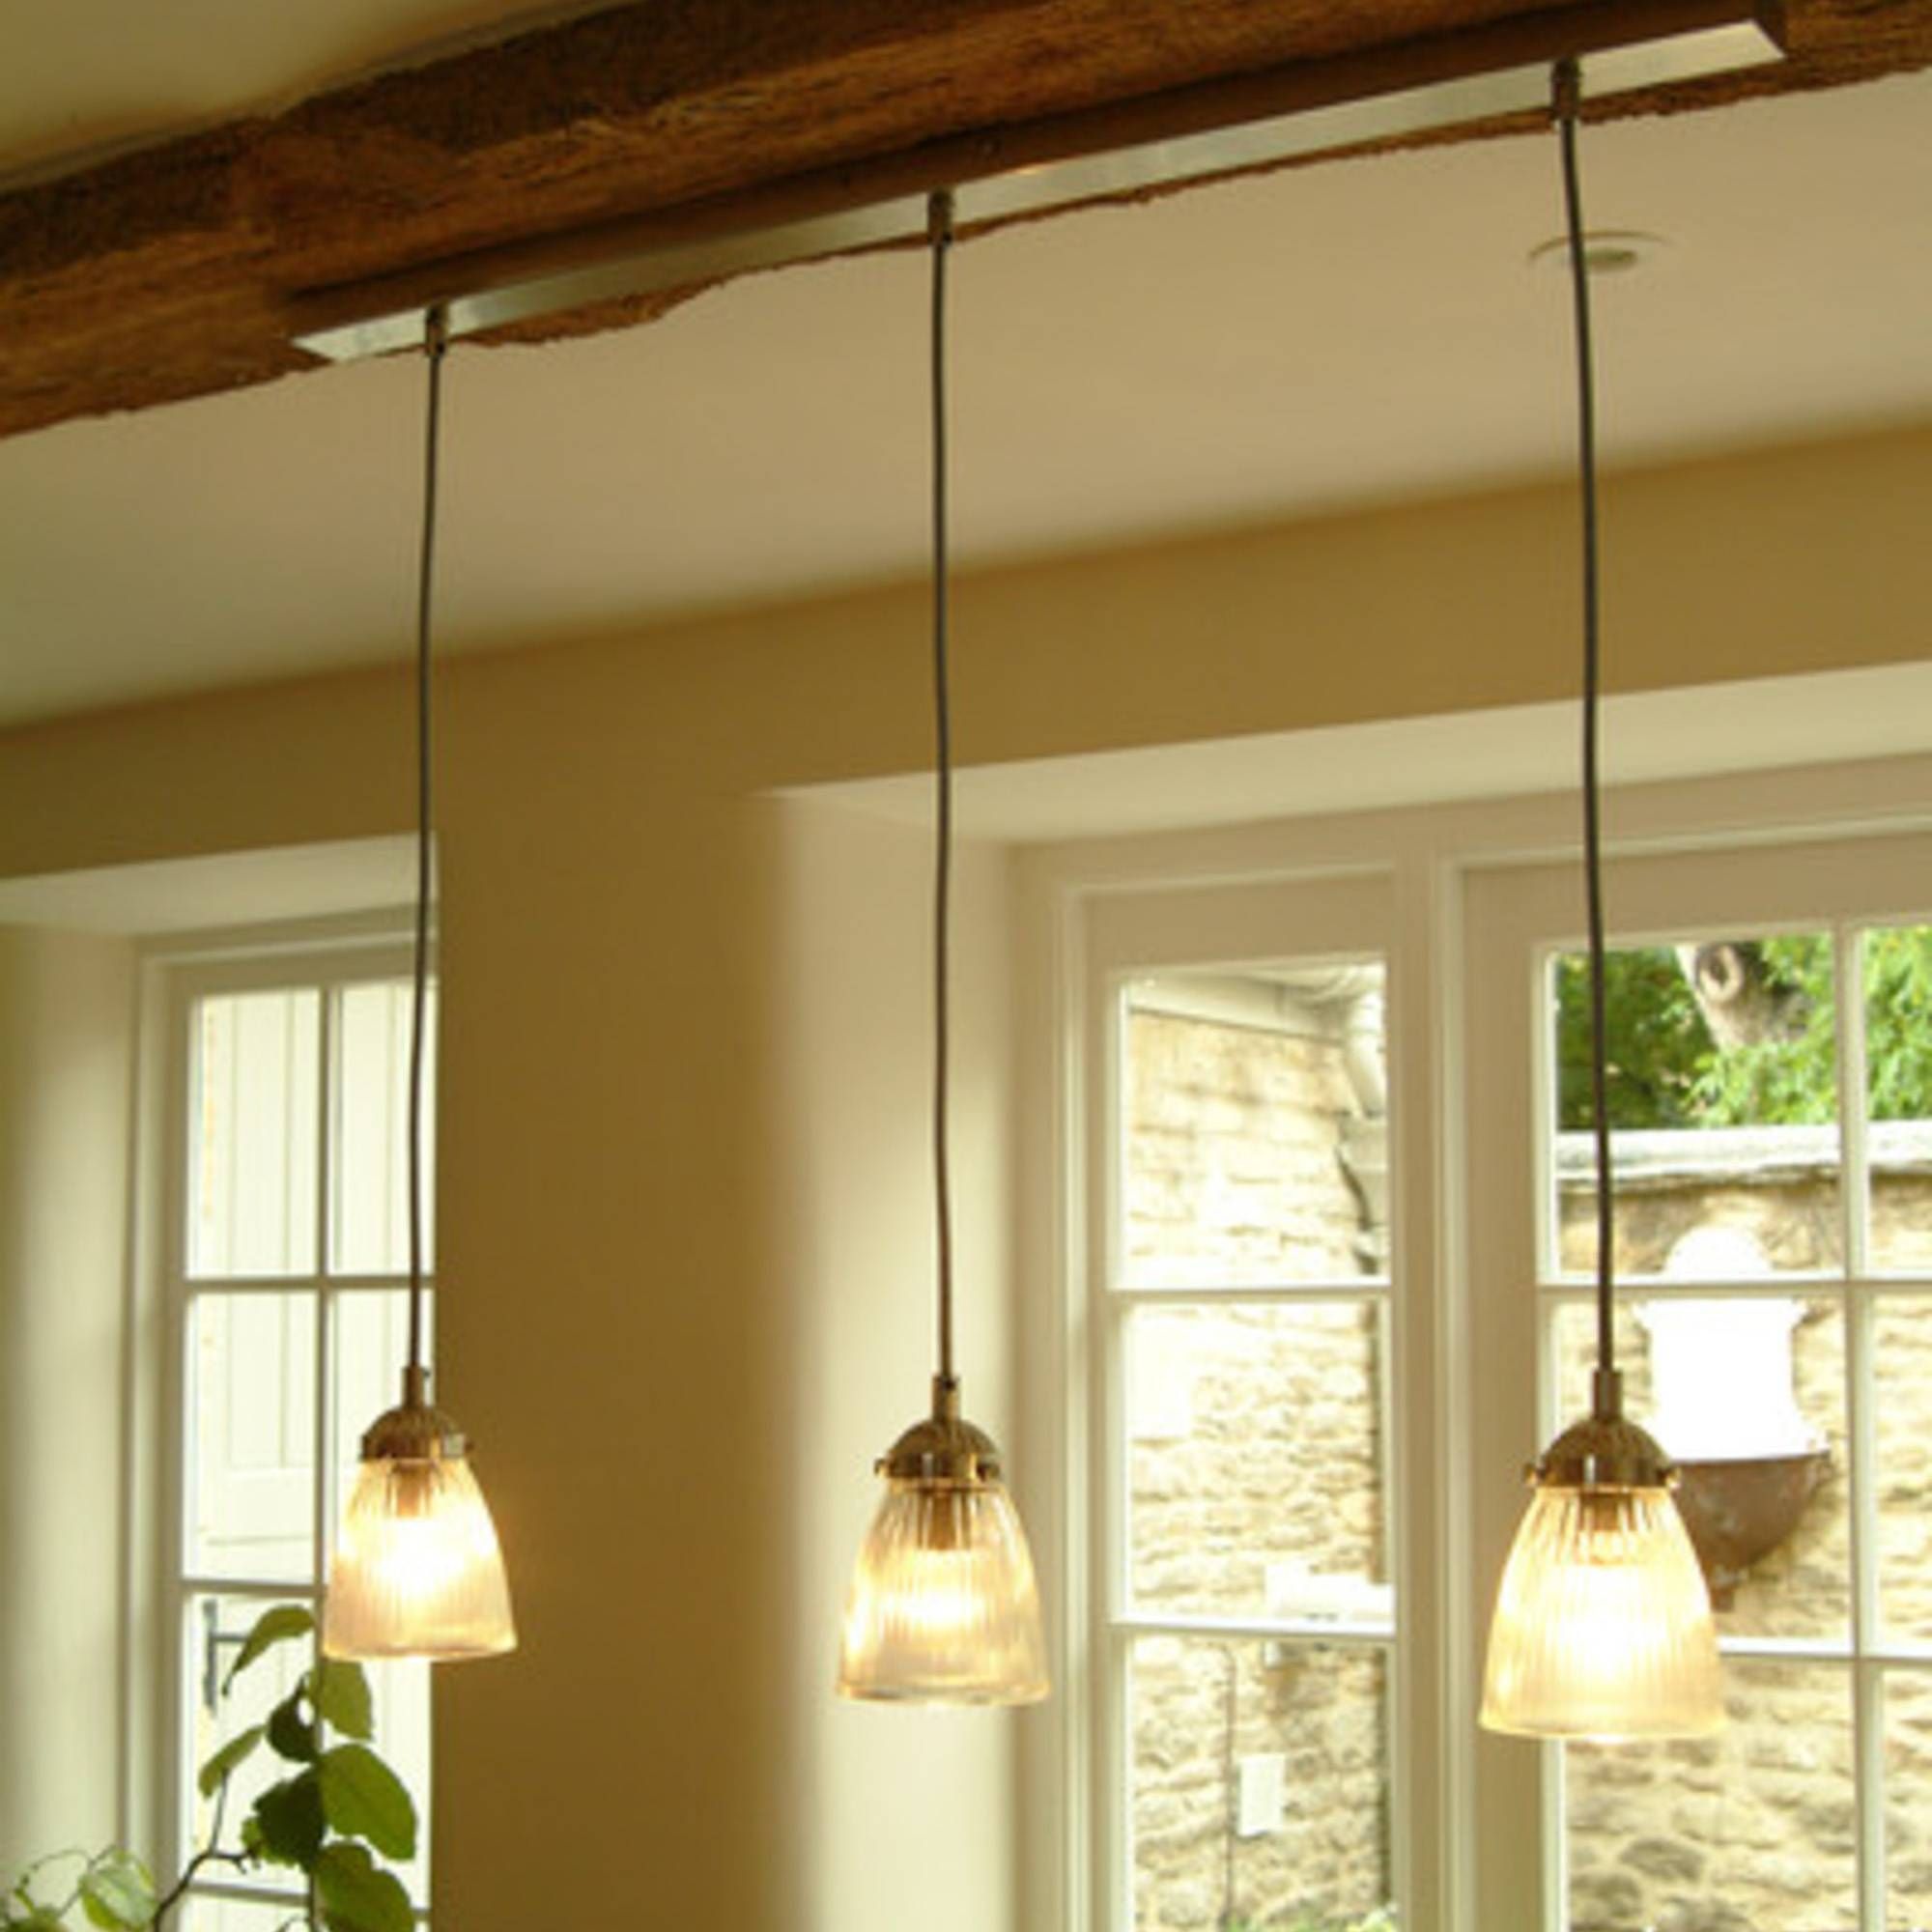  triple pendant kitchen lights